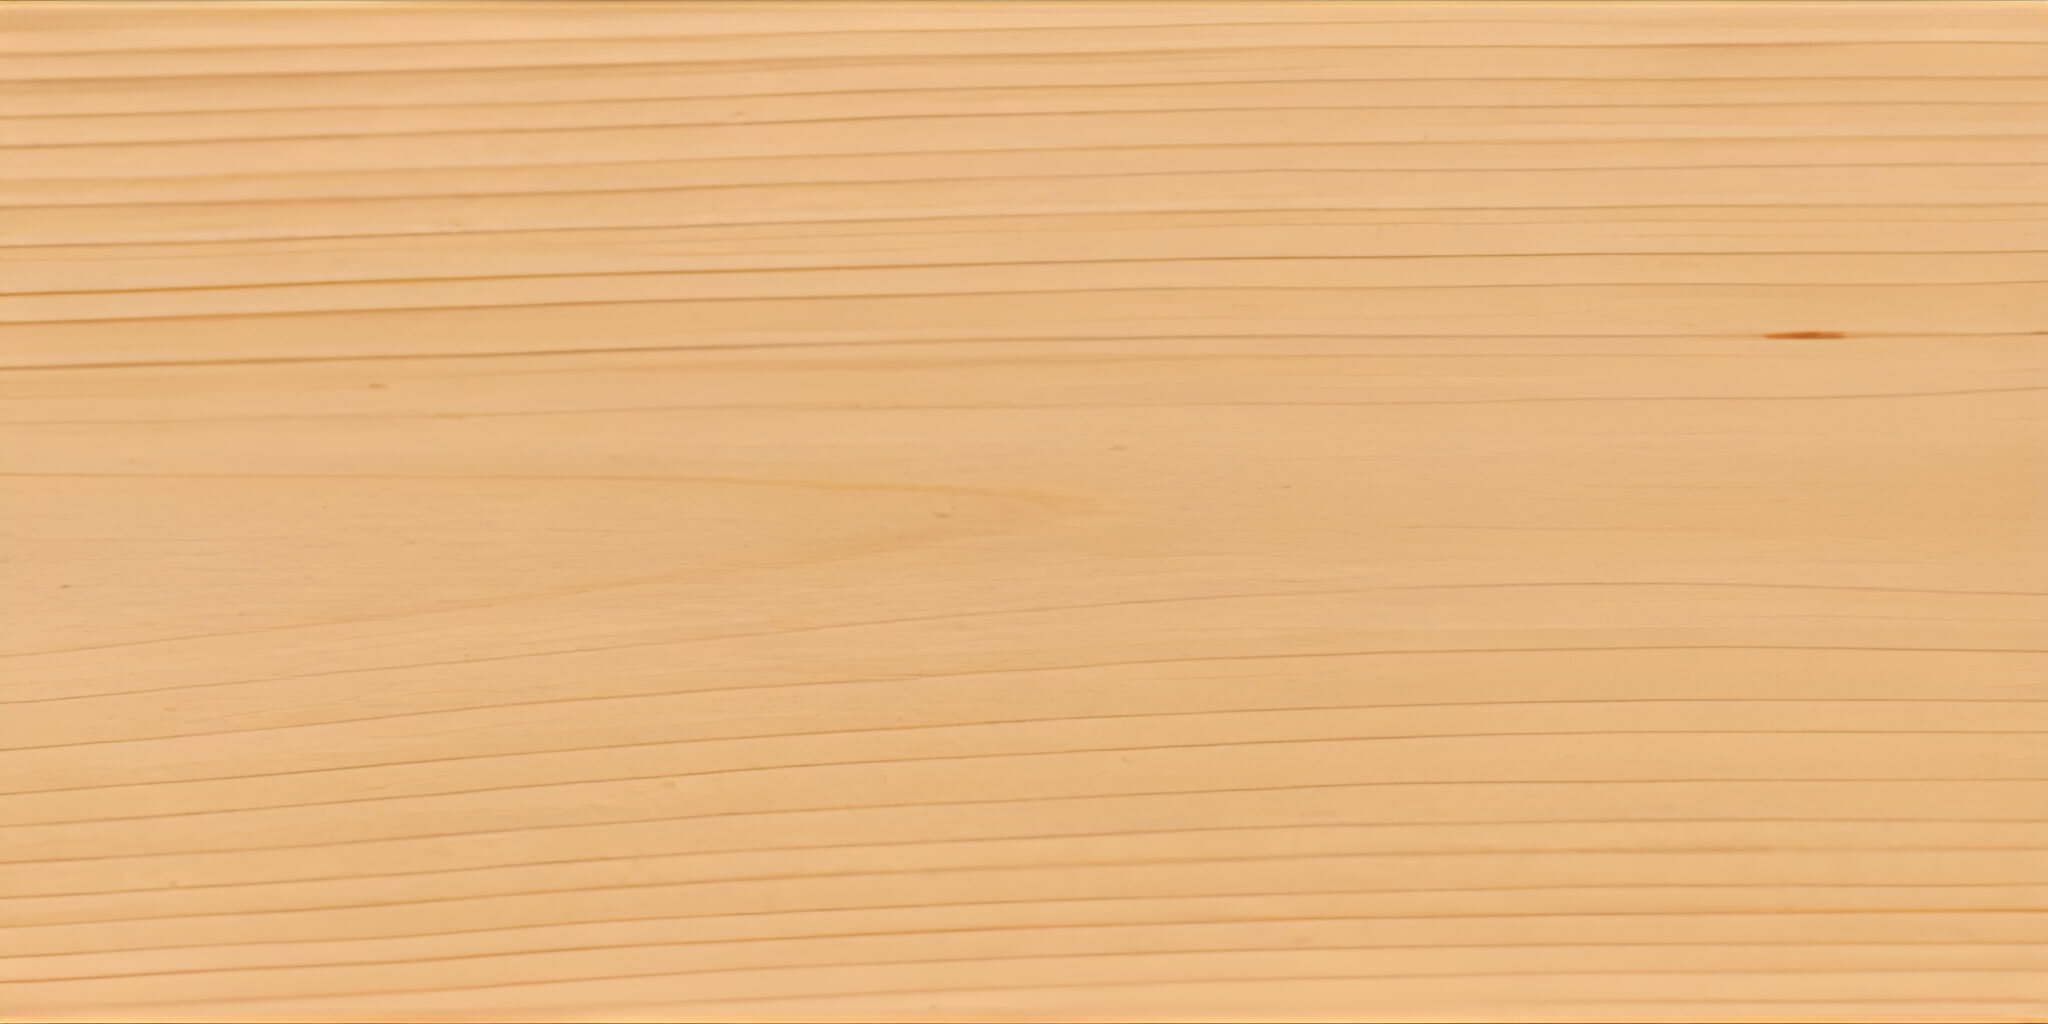 Plywood, Wood, Lumber, Interior Design, Tree